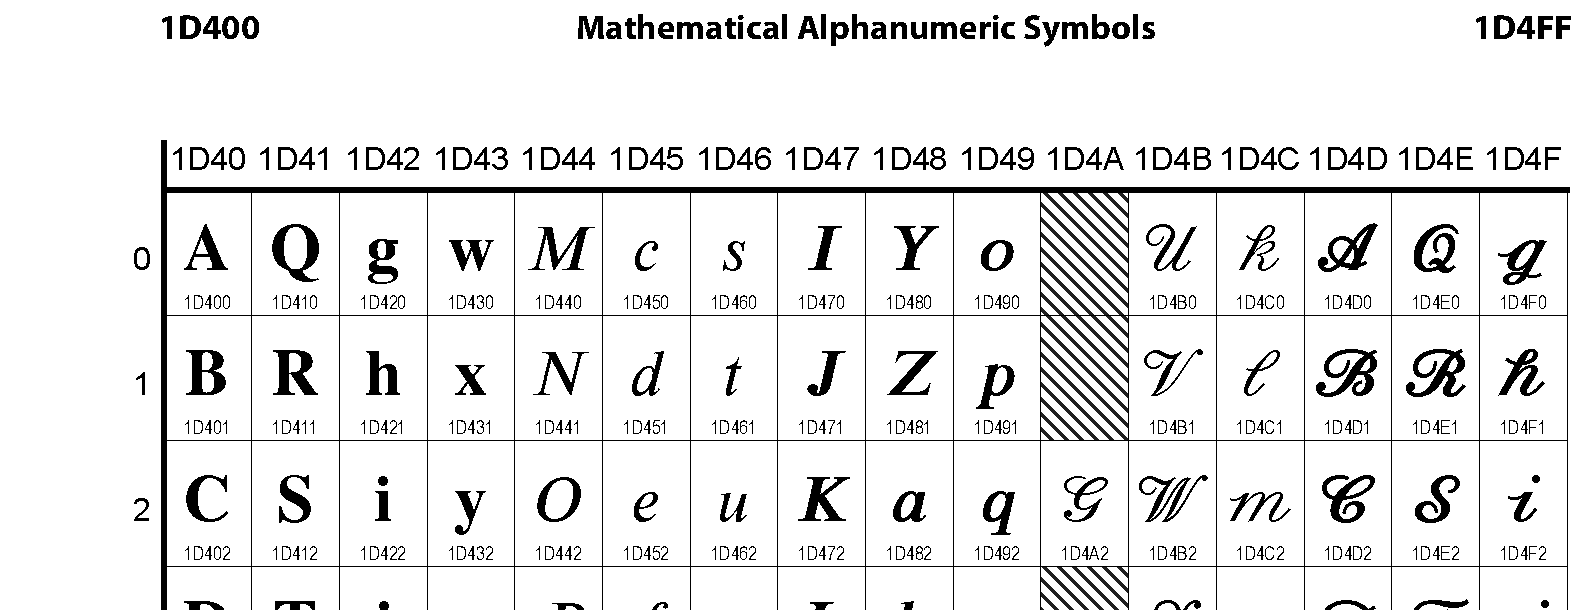 Unicode - Mathematical Alphanumeric Symbols